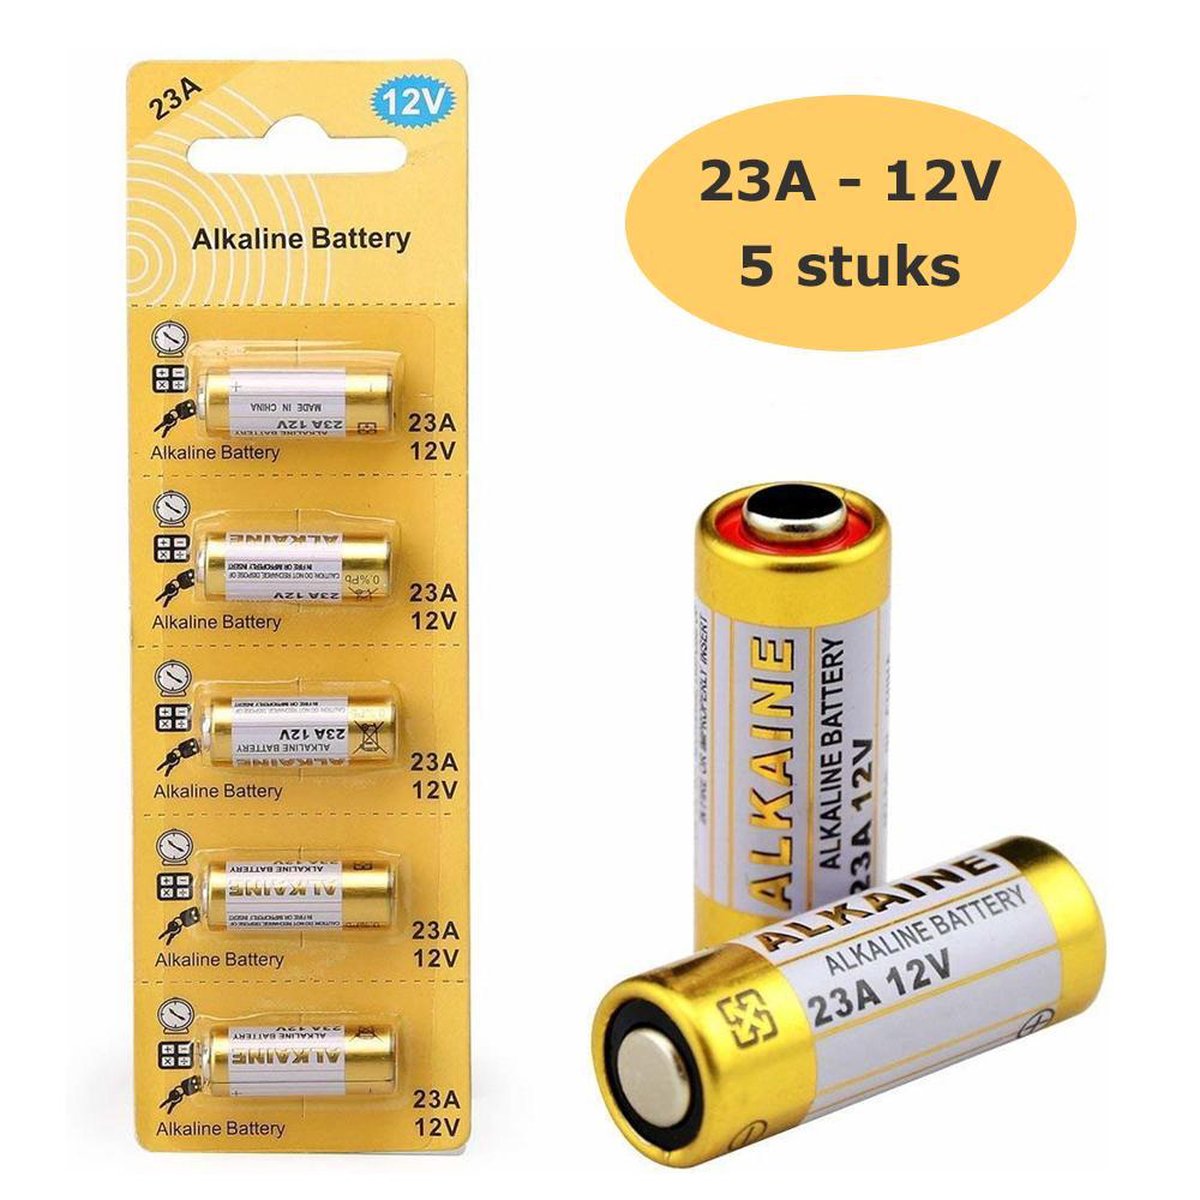 23a 12v hoge capaciteit alkaline batterijen - 5 stuks blister | bol.com